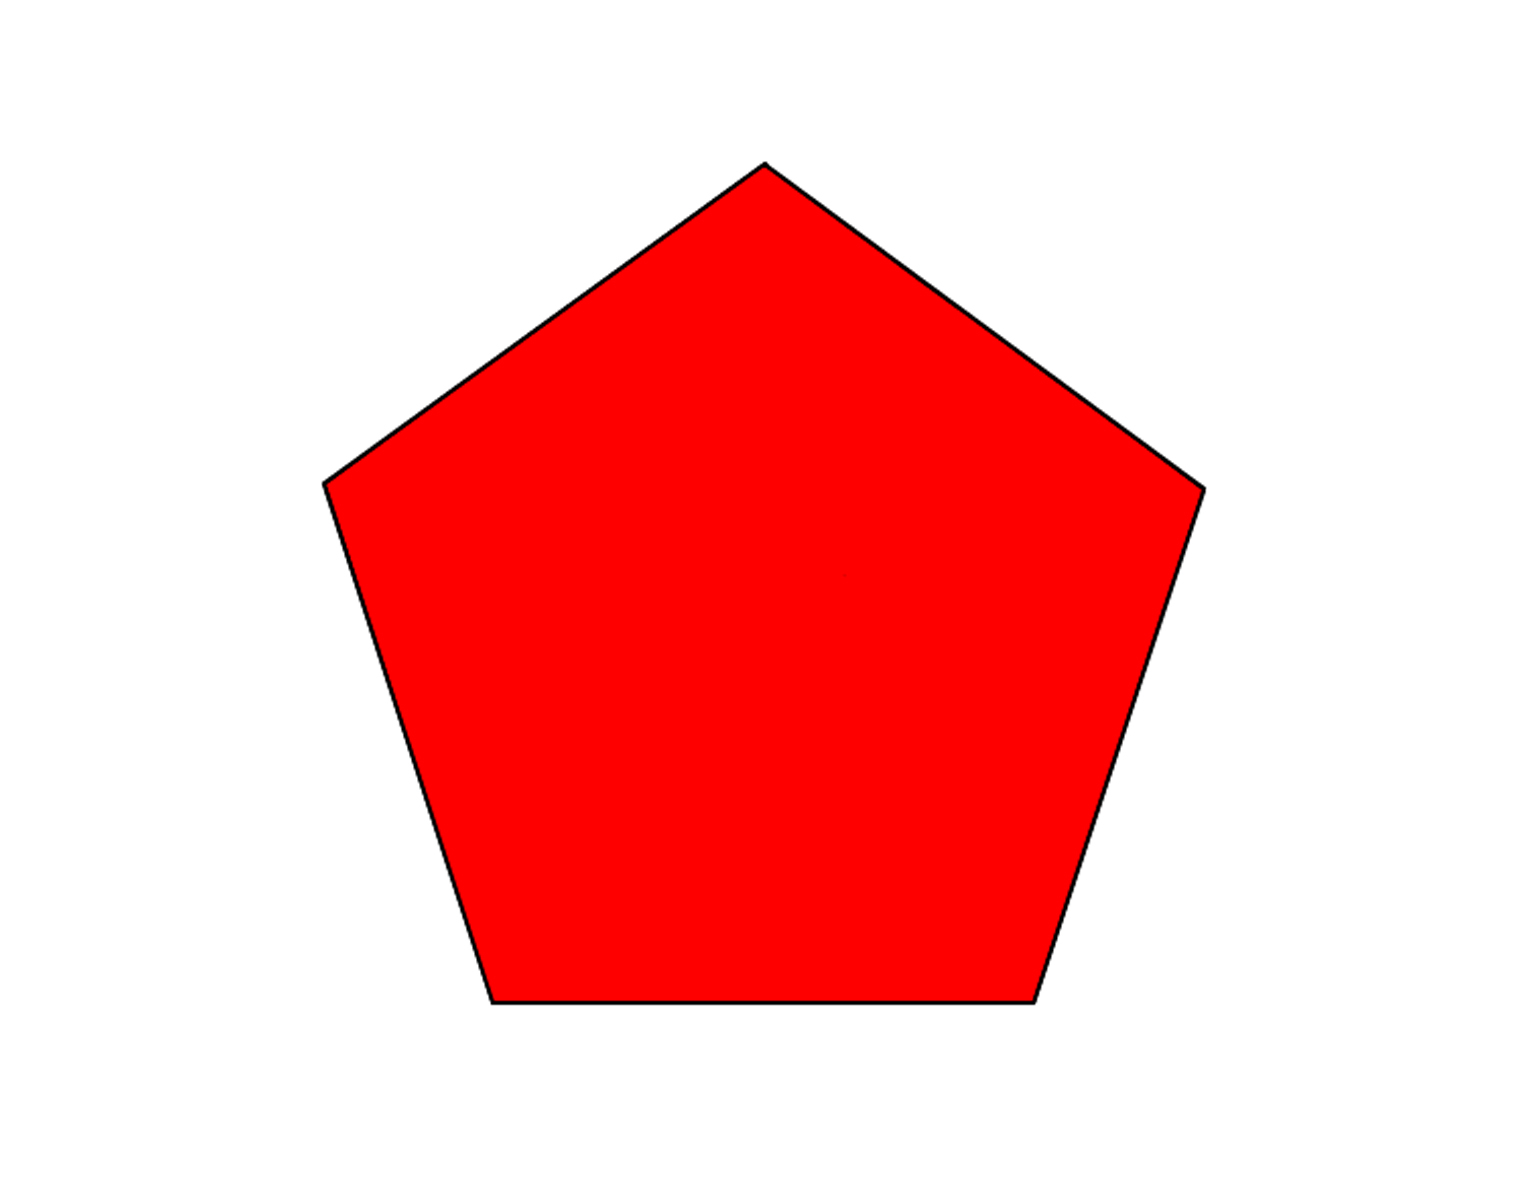 Фигура пятиугольник